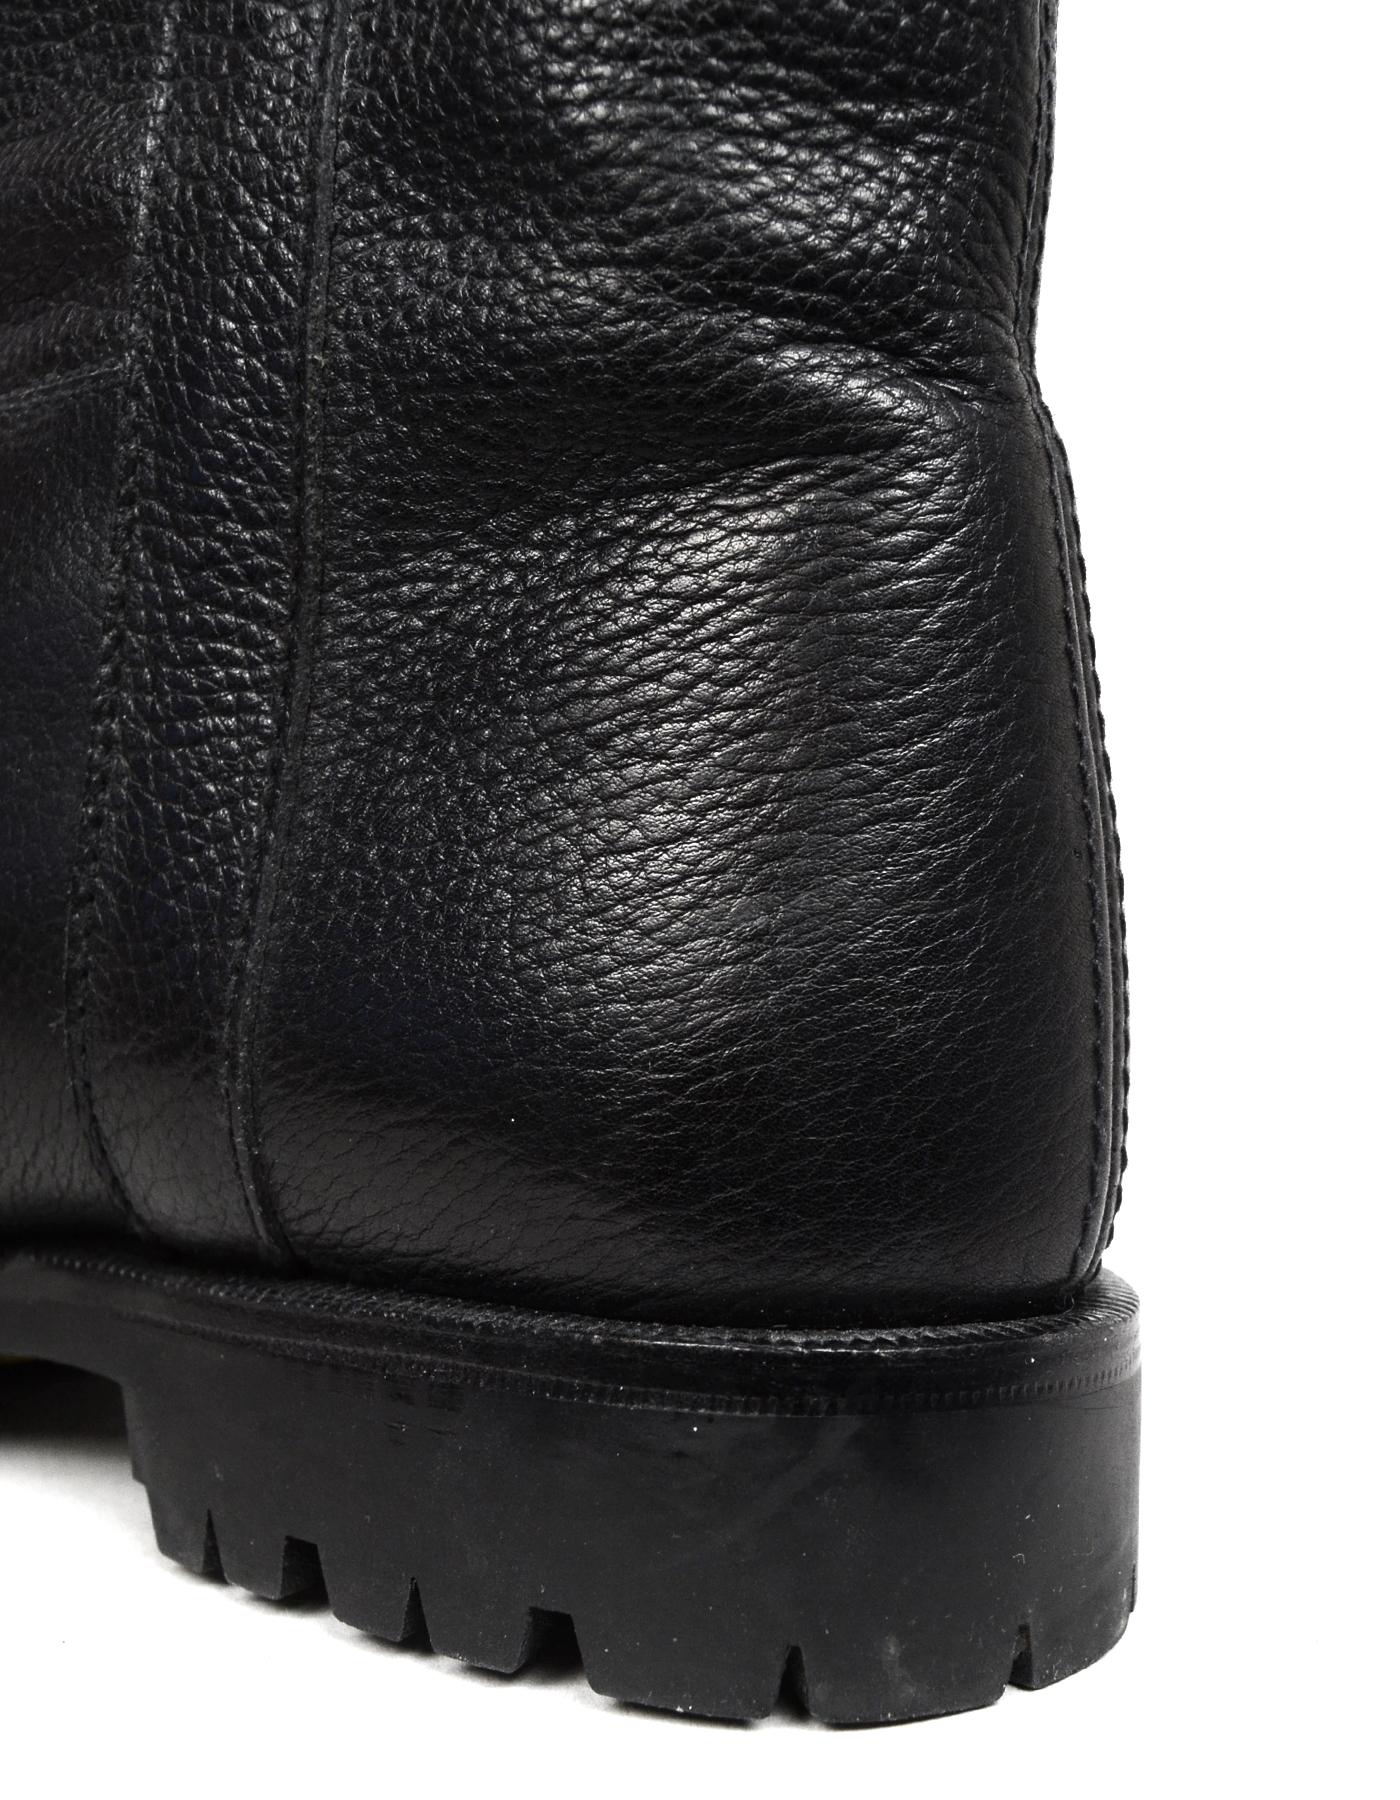 Gravati Black Leather Mid Calf Boots Sz 7.5 1